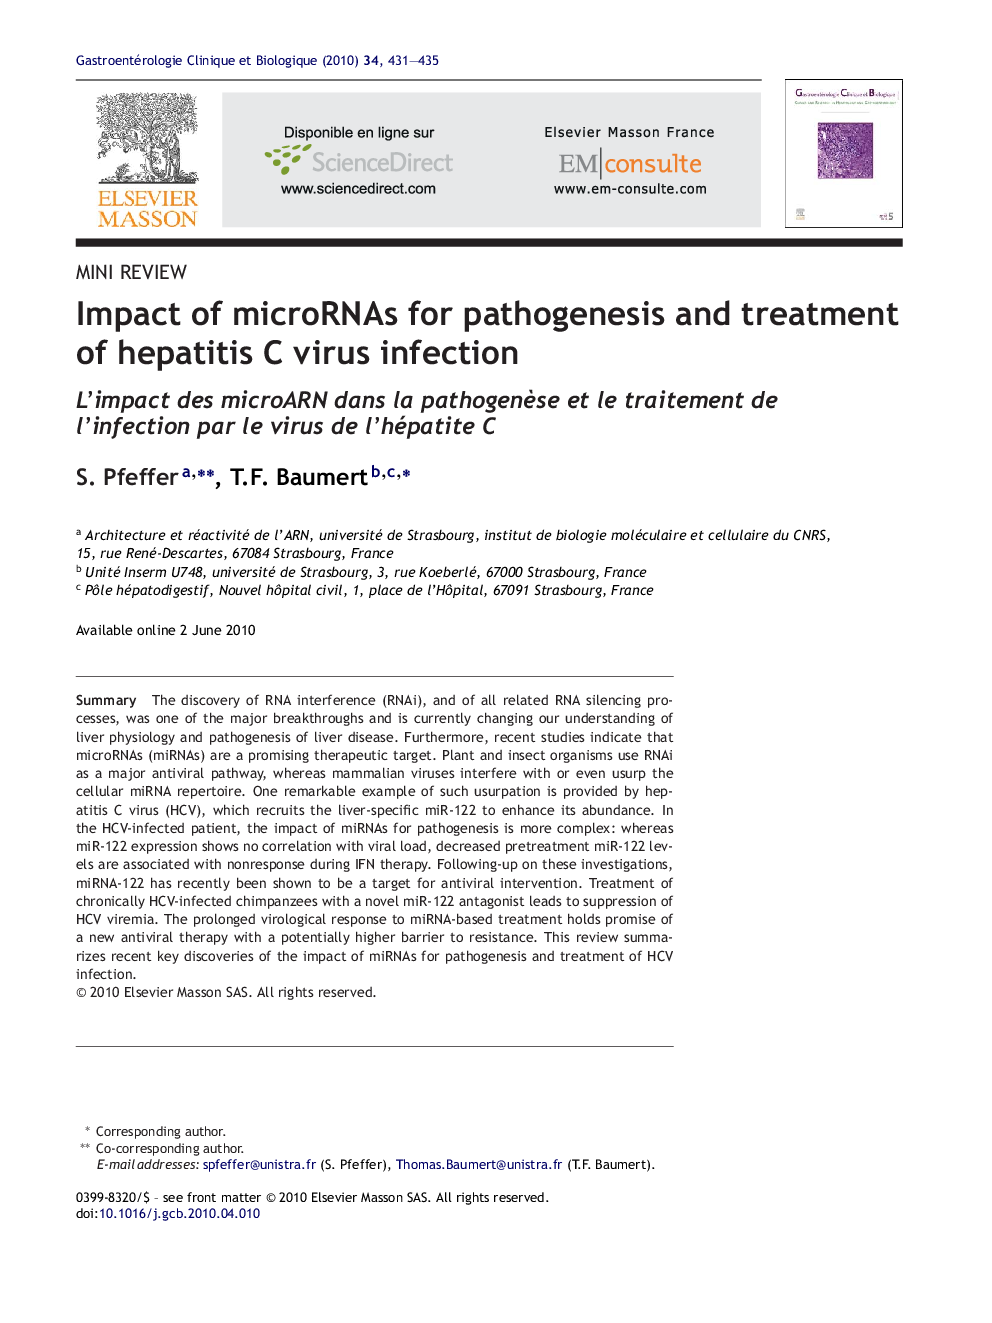 Impact of microRNAs for pathogenesis and treatment of hepatitis C virus infection